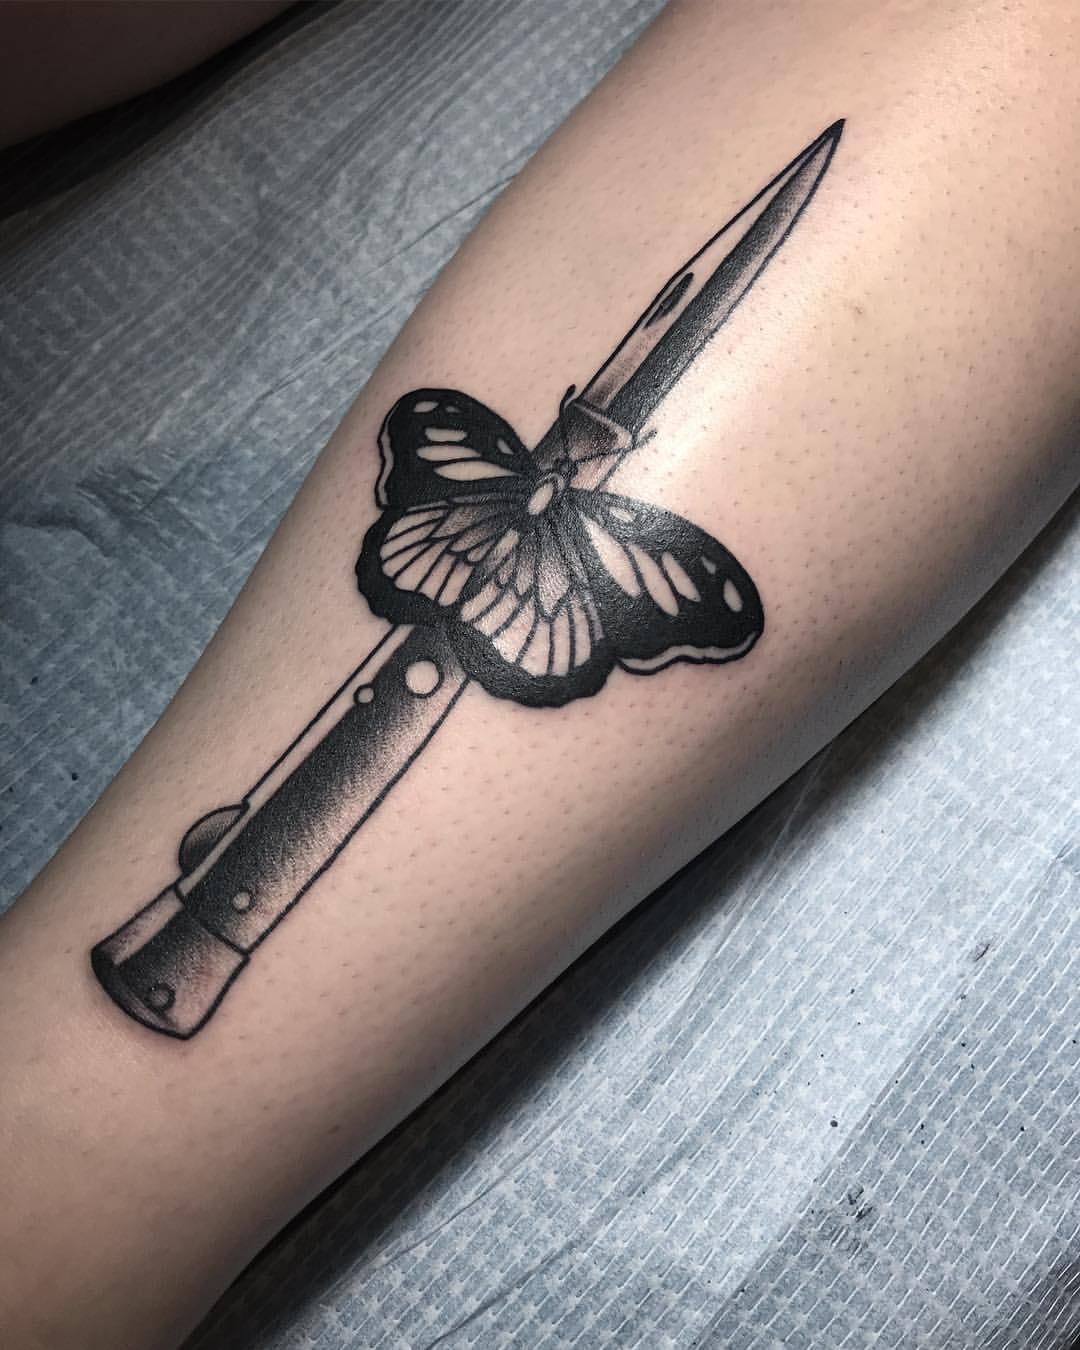 Moth and knife tattoo